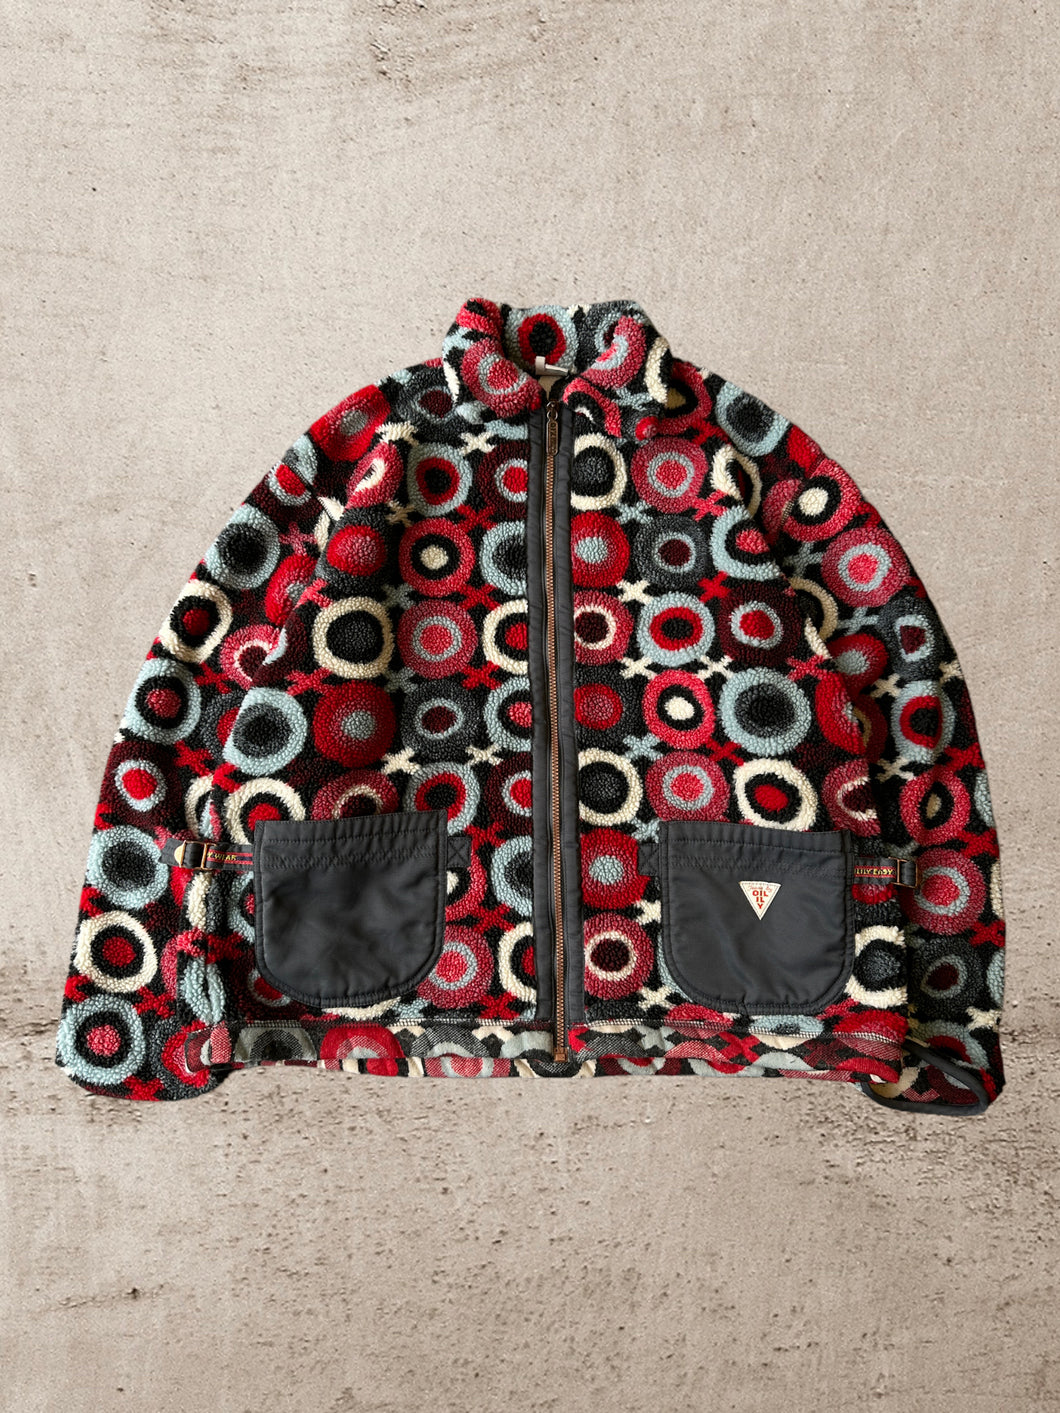 90s Oilily Patterned Fleece Jacket - Large